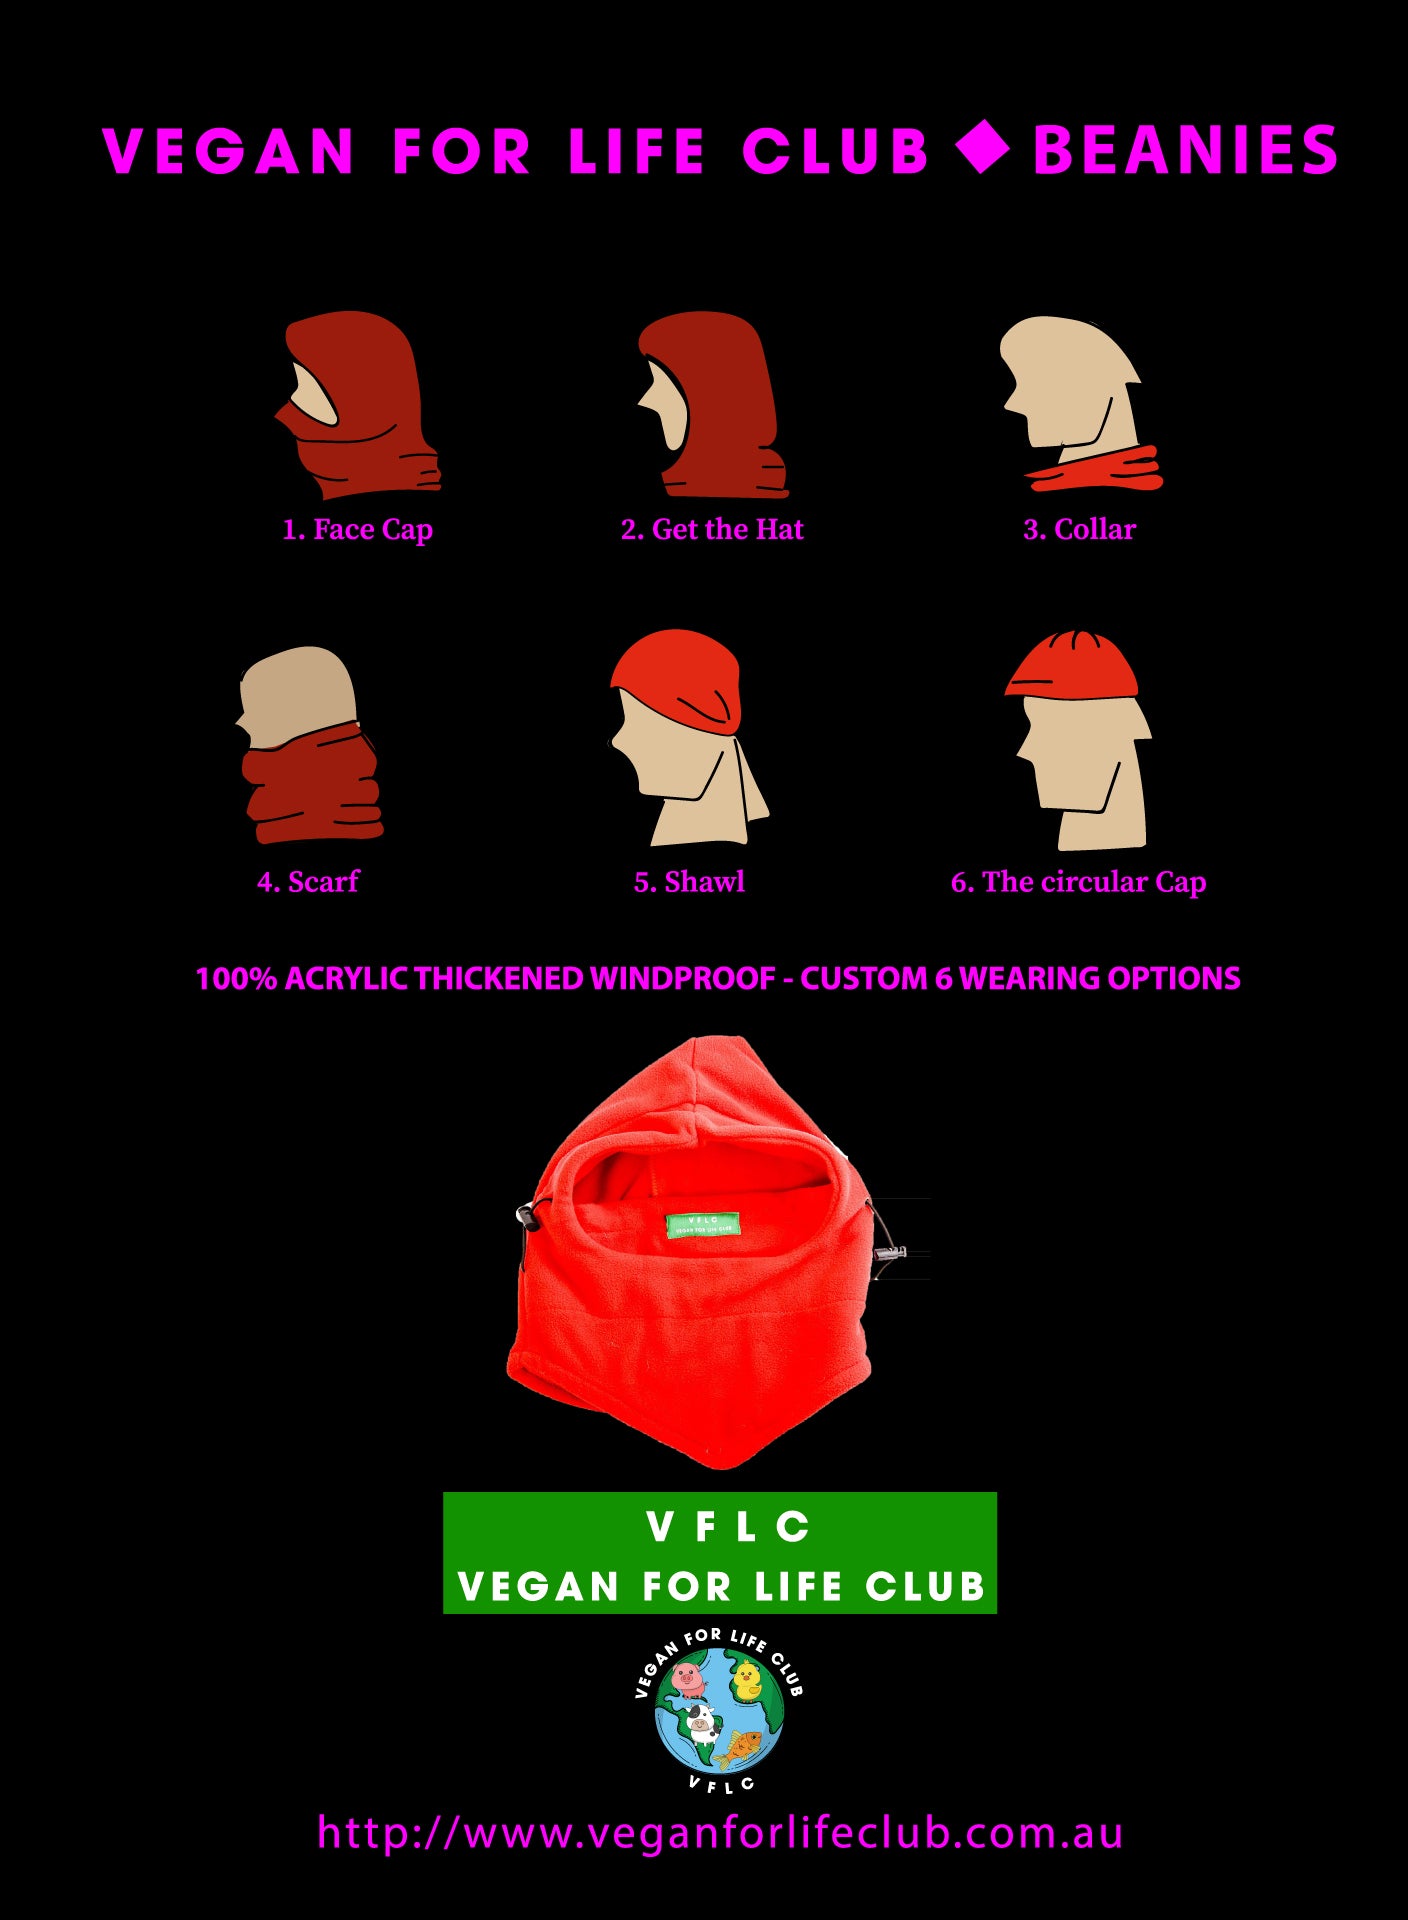 BEANIES - VEGAN FOR LIFE CLUB